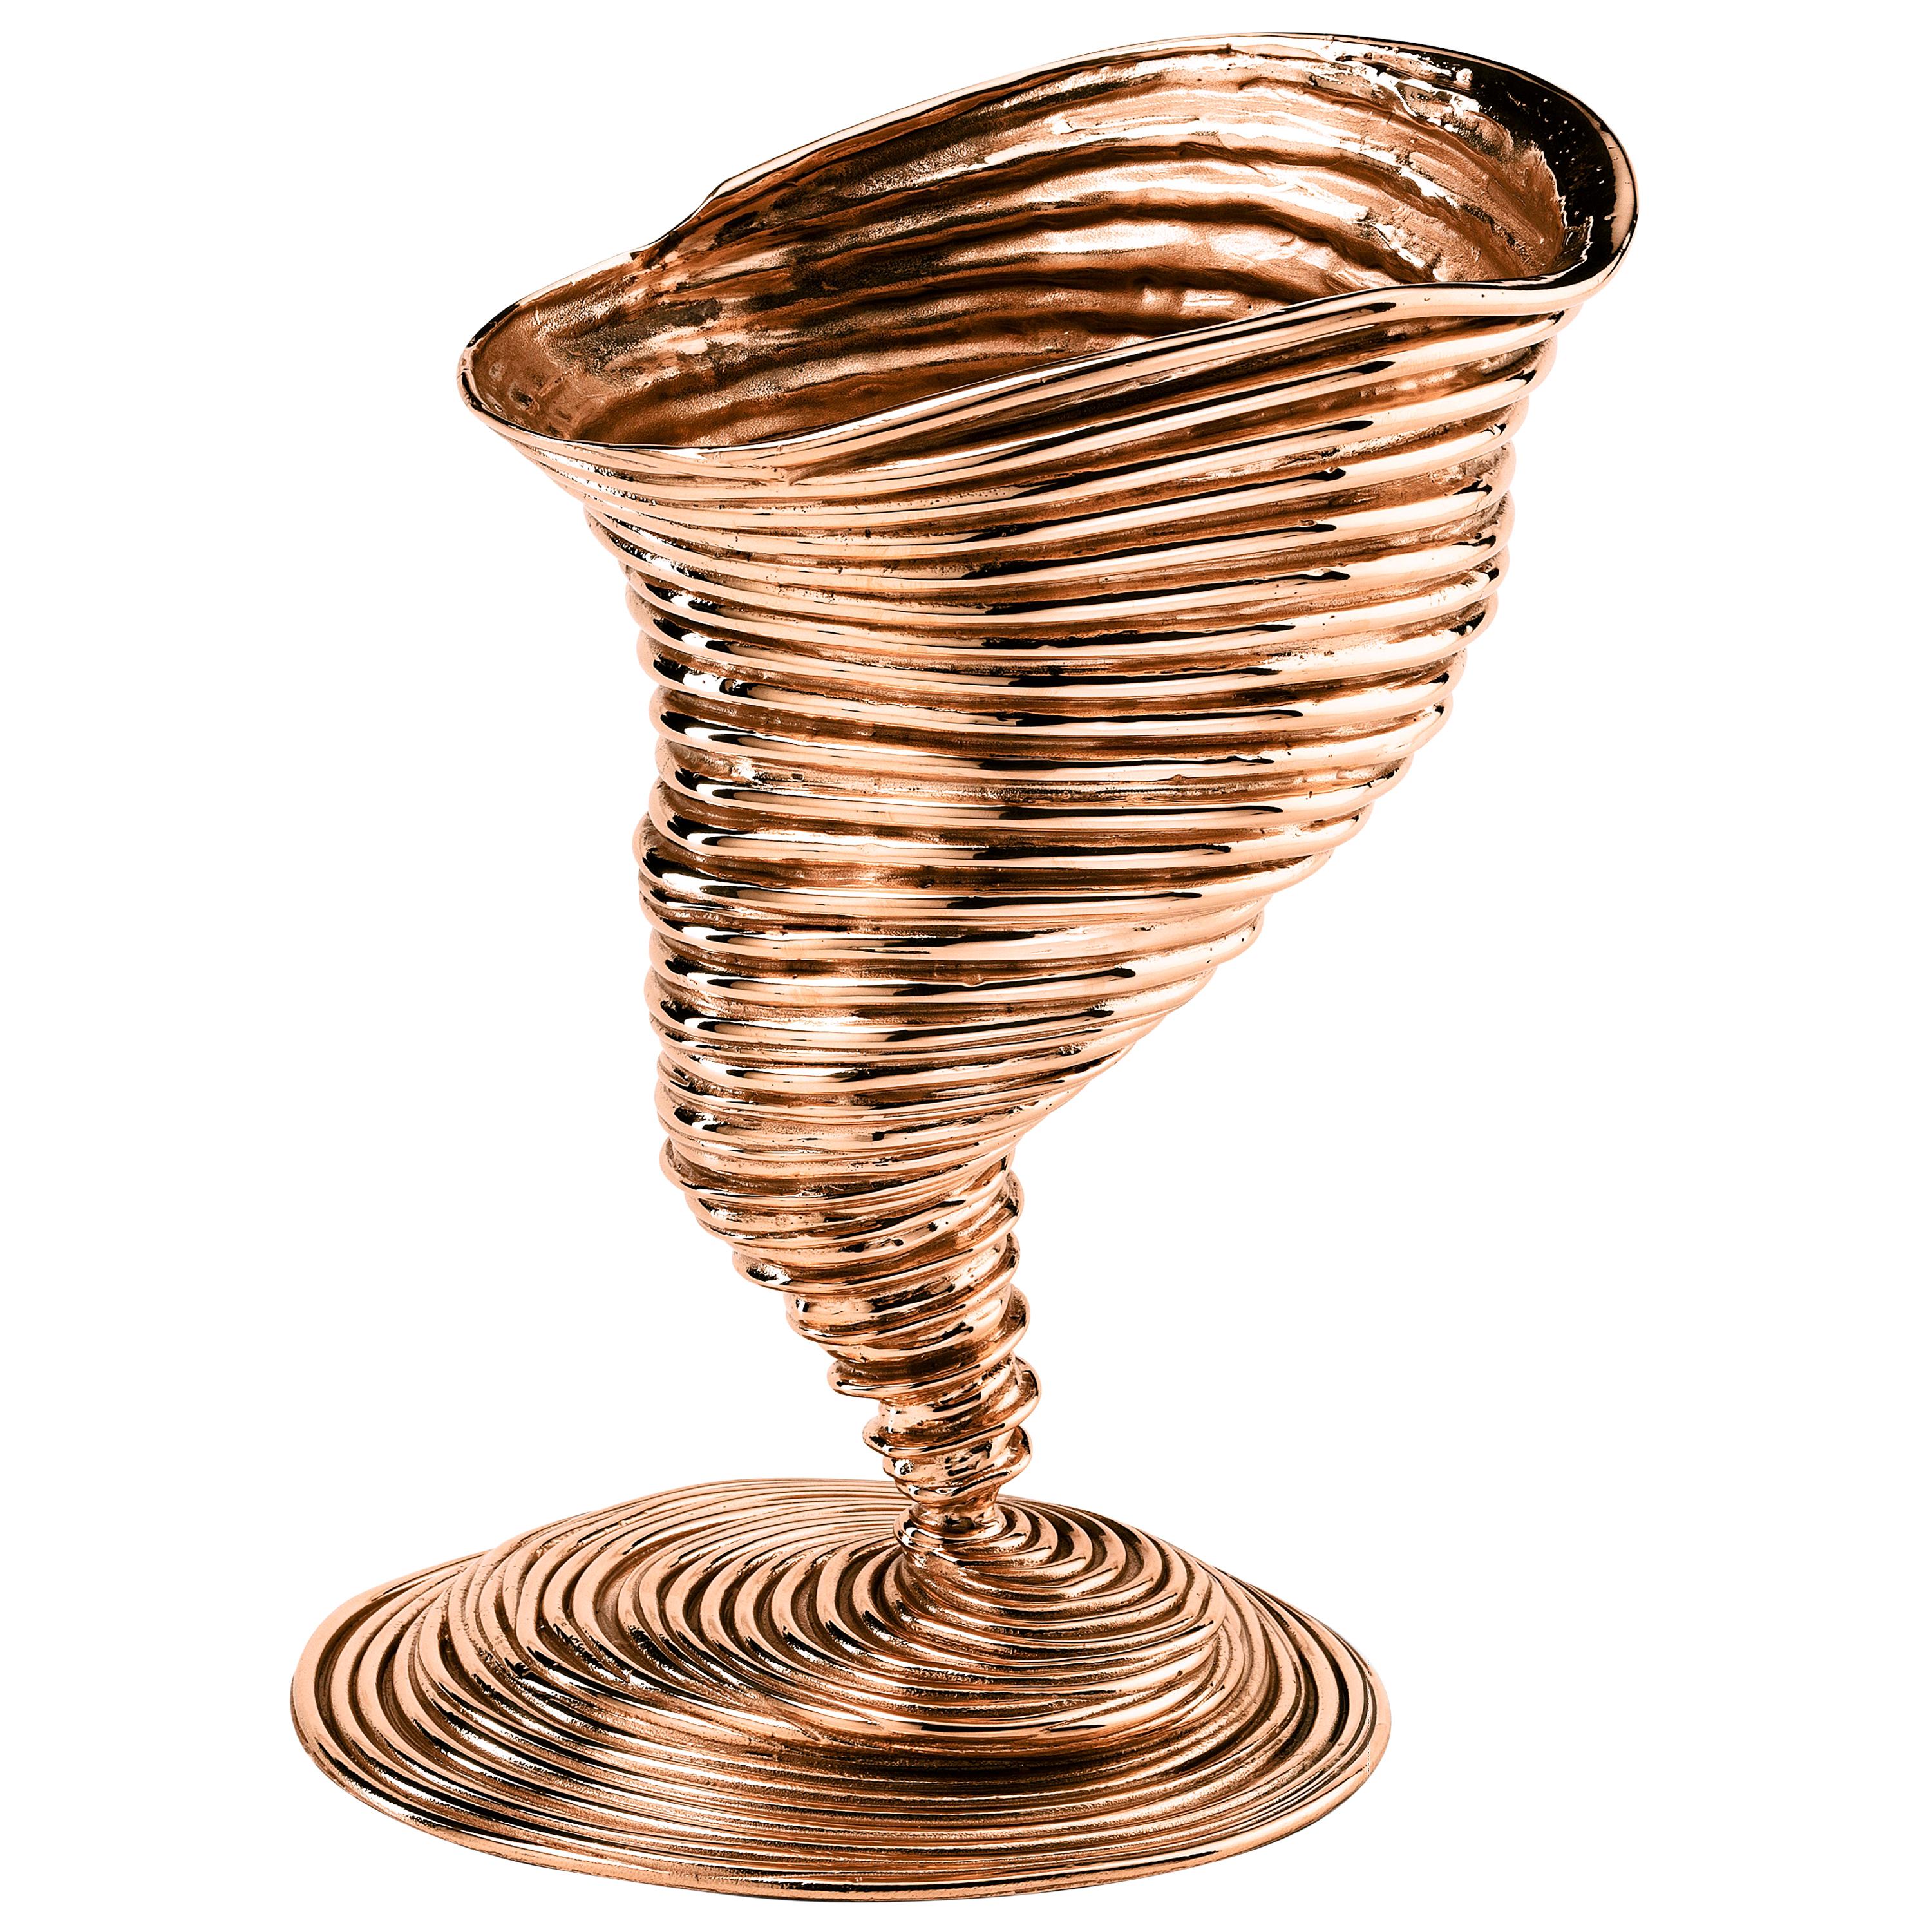 Tornado Spiral Sculptural Vase in Bronze by Campana Brothers